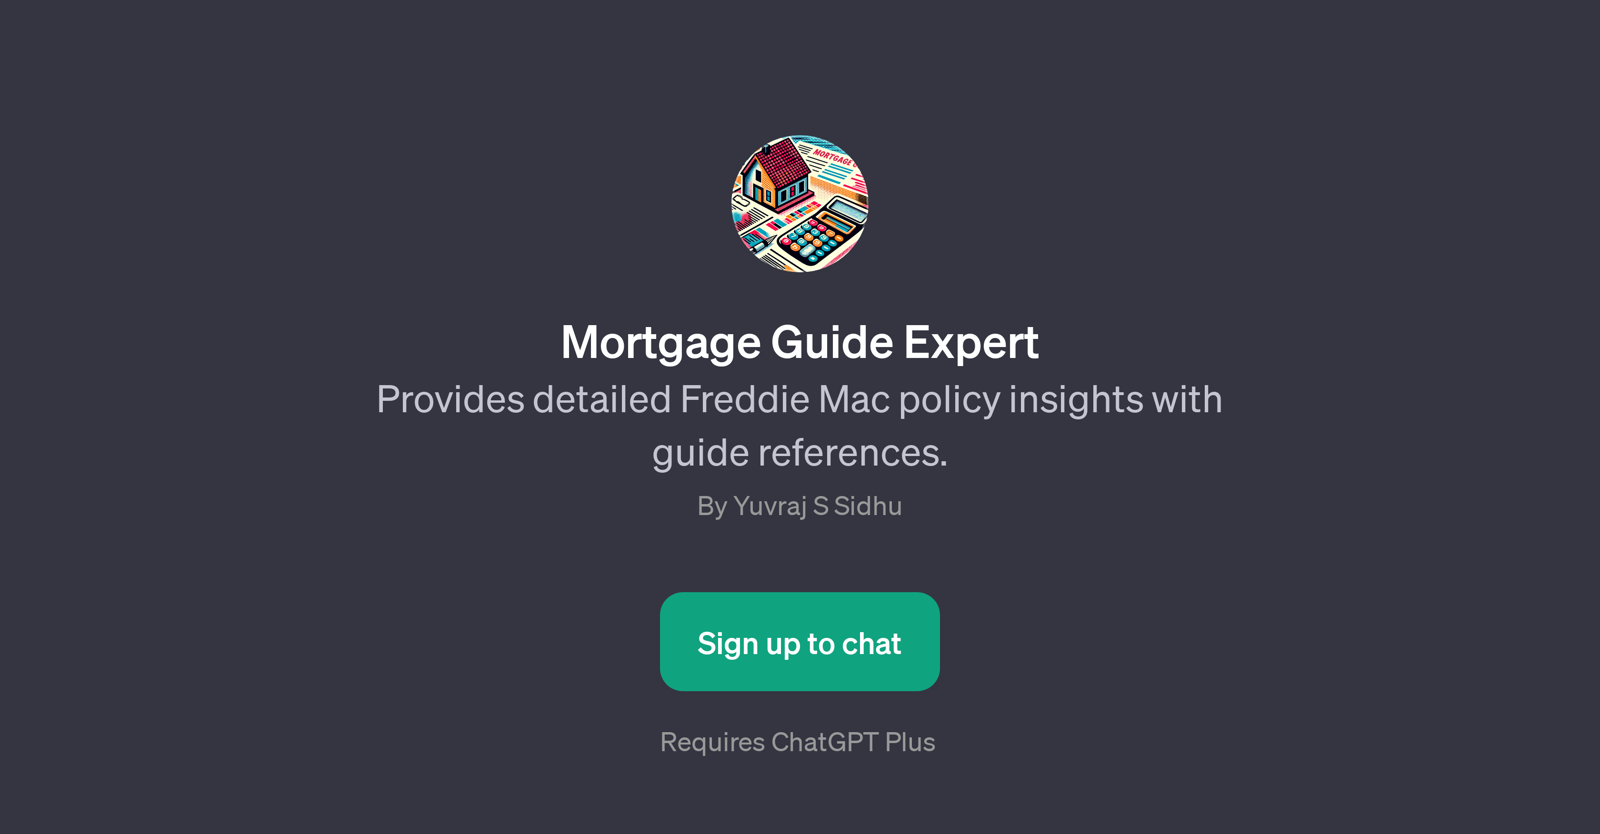 Mortgage Guide Expert website